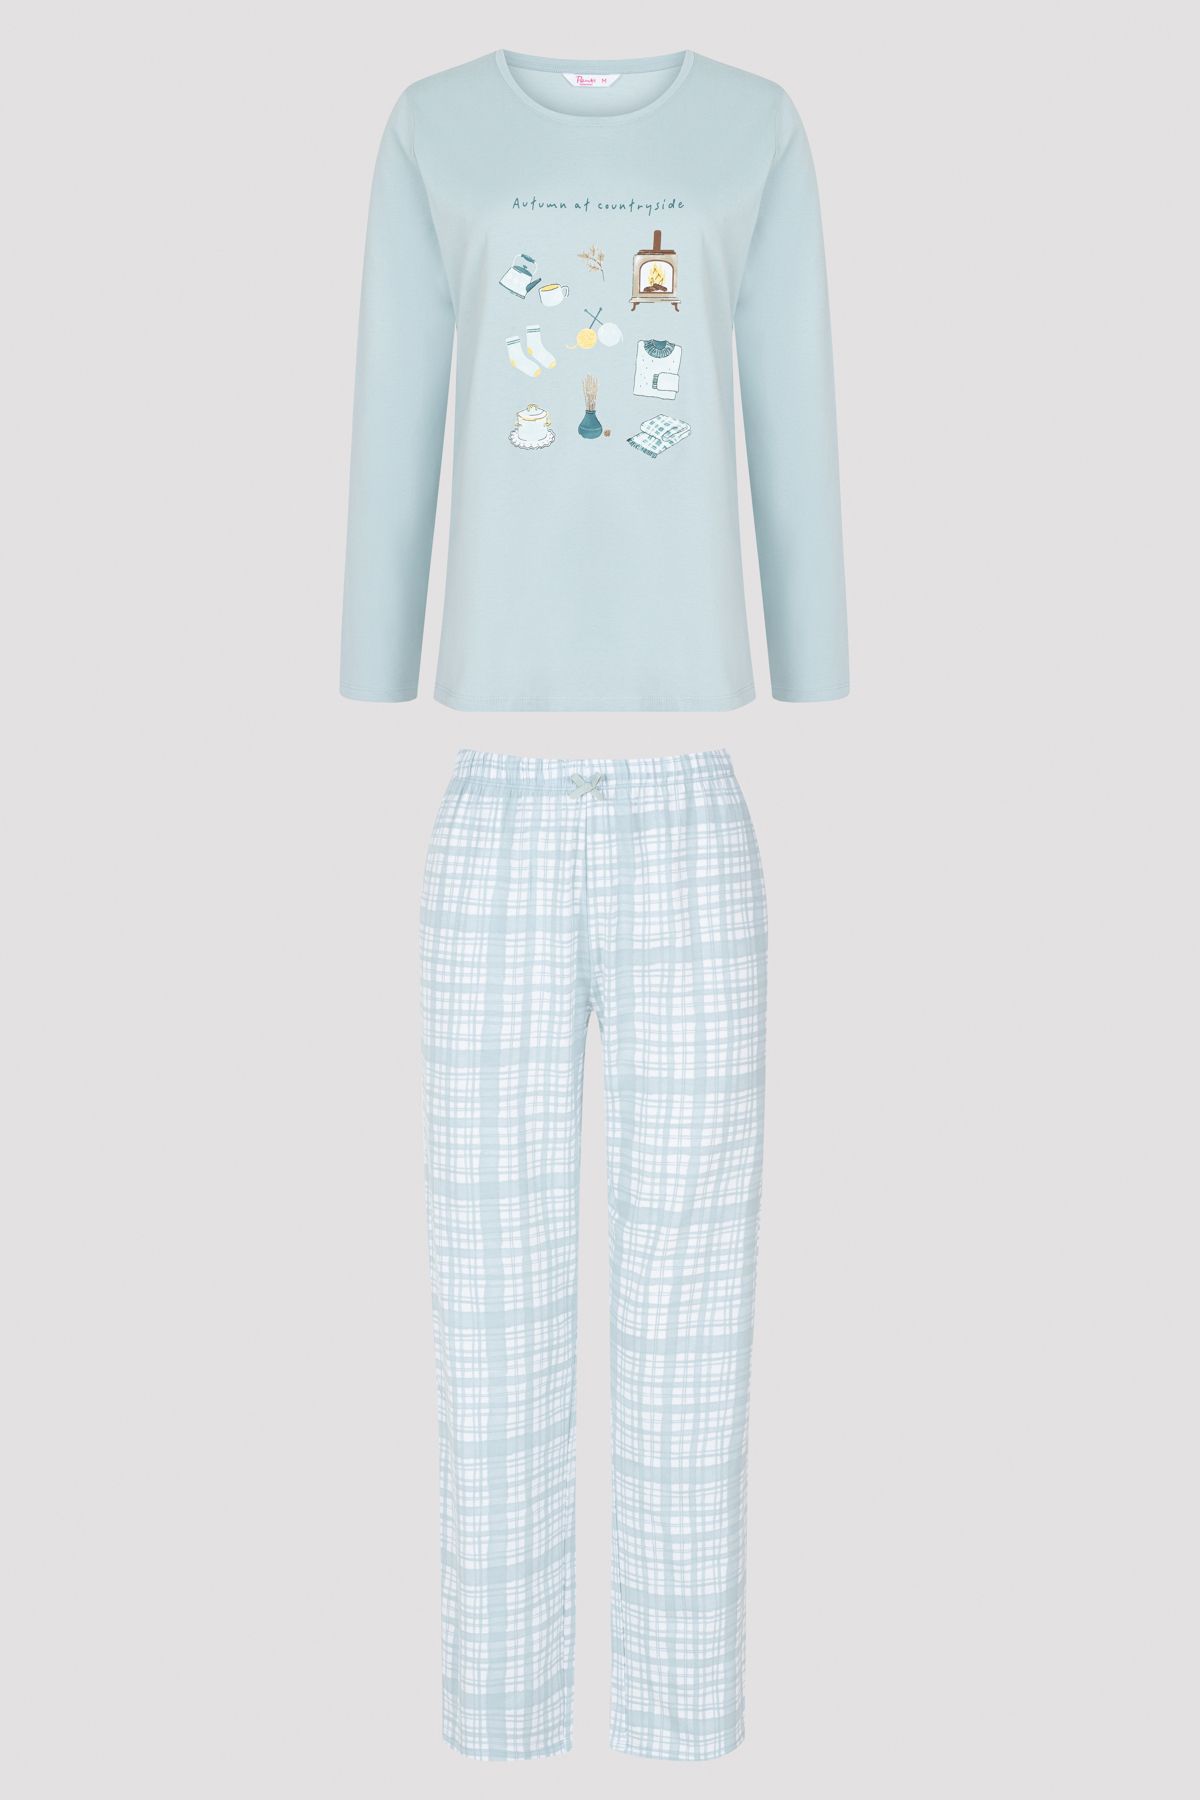 Penti Mint Autumn Pantolon Pijama Takımı